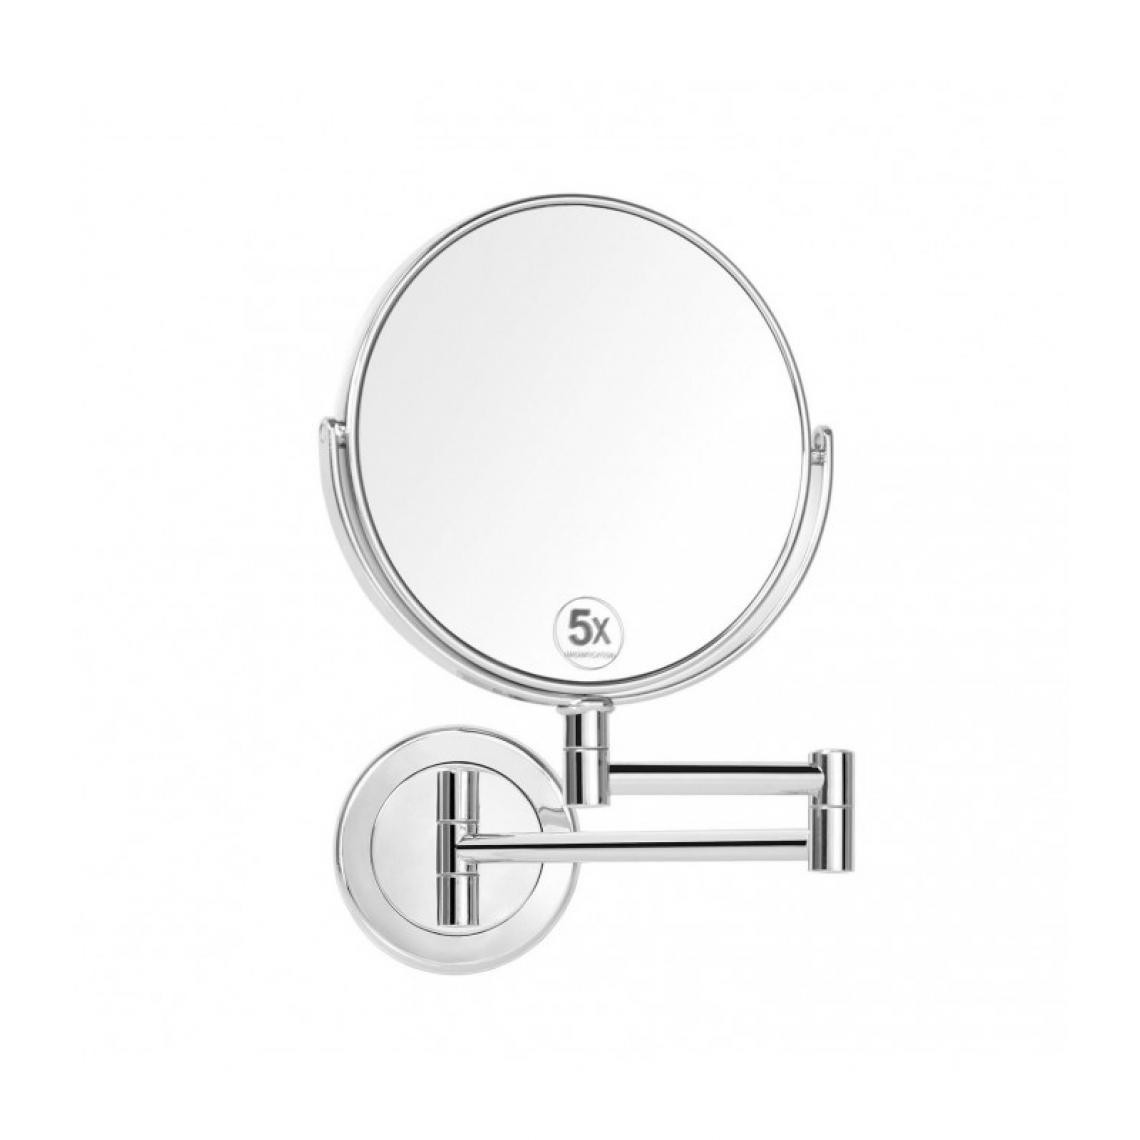 Wadiga - Miroir Grossissant Double Face Rond (x5) sur Bras Extensible - Miroir de salle de bain